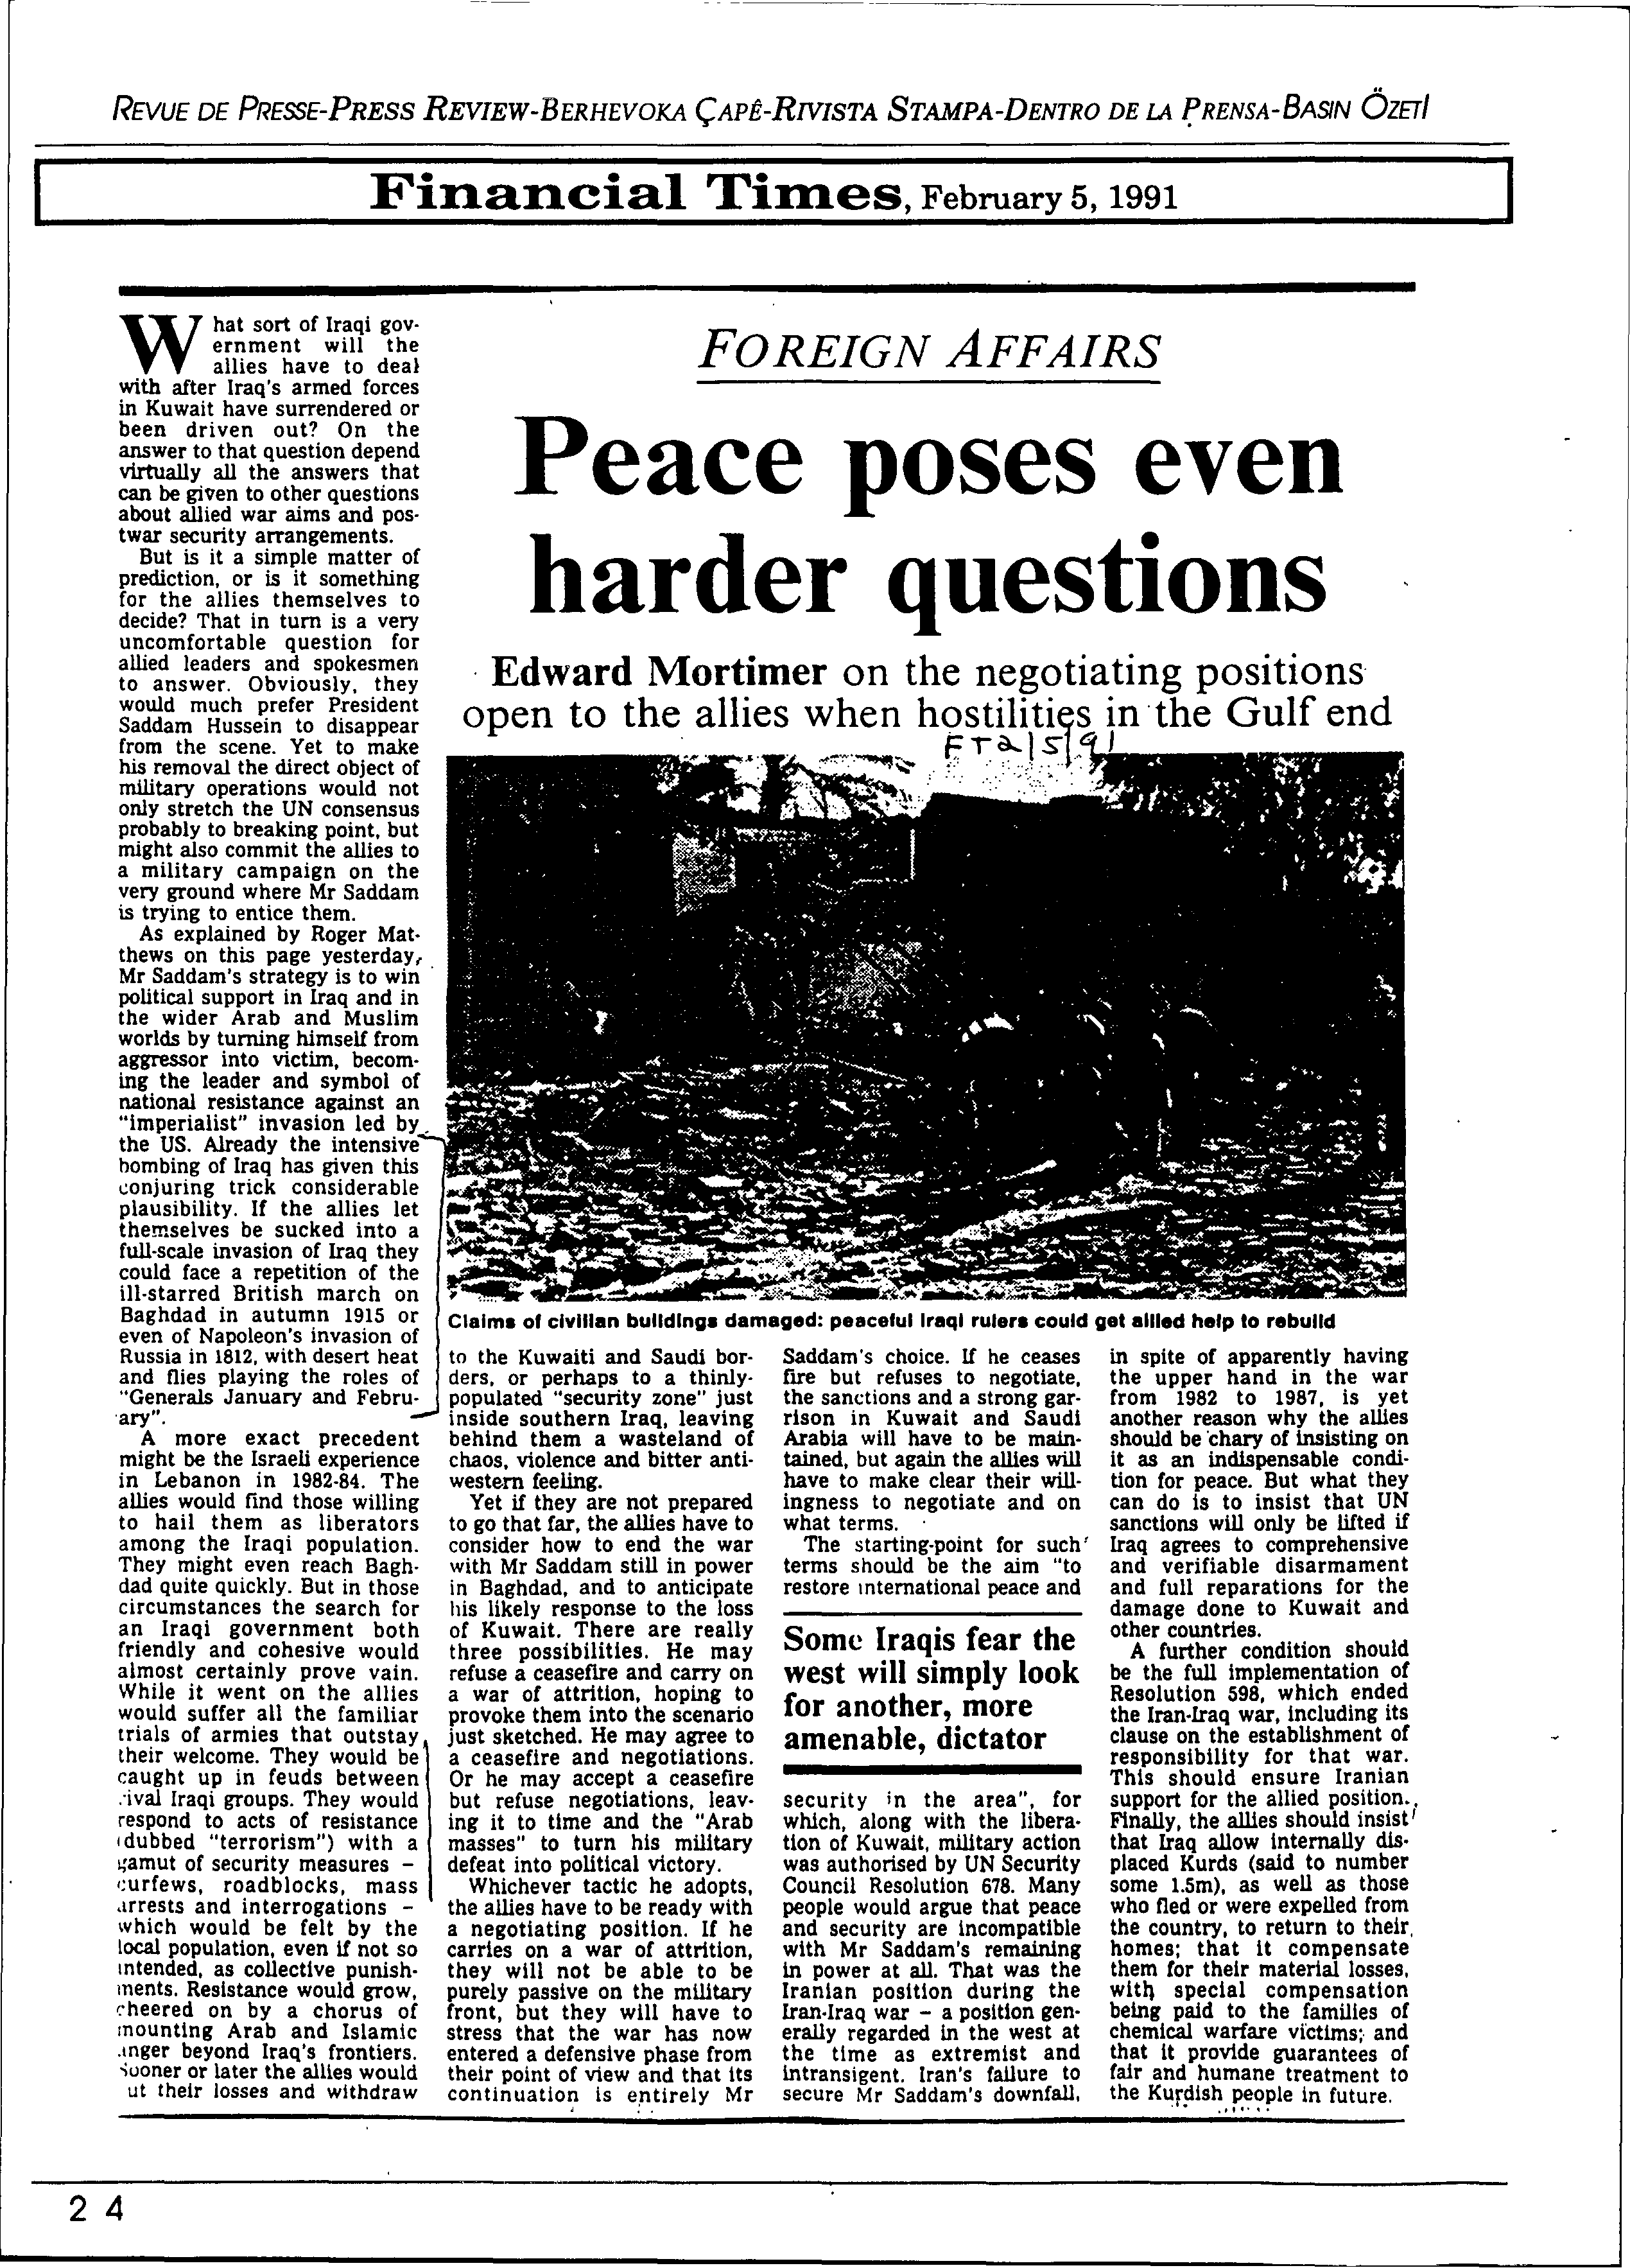 REVUE DE PRESSE-PRESS REVIEW-BERHEVOKA ÇAPÊ-RIVISTA STAMPA-DENTRO DE LA frensa-basin ÖZETI Financial Times,February 5, 1991 What sort of Iraqi gov.